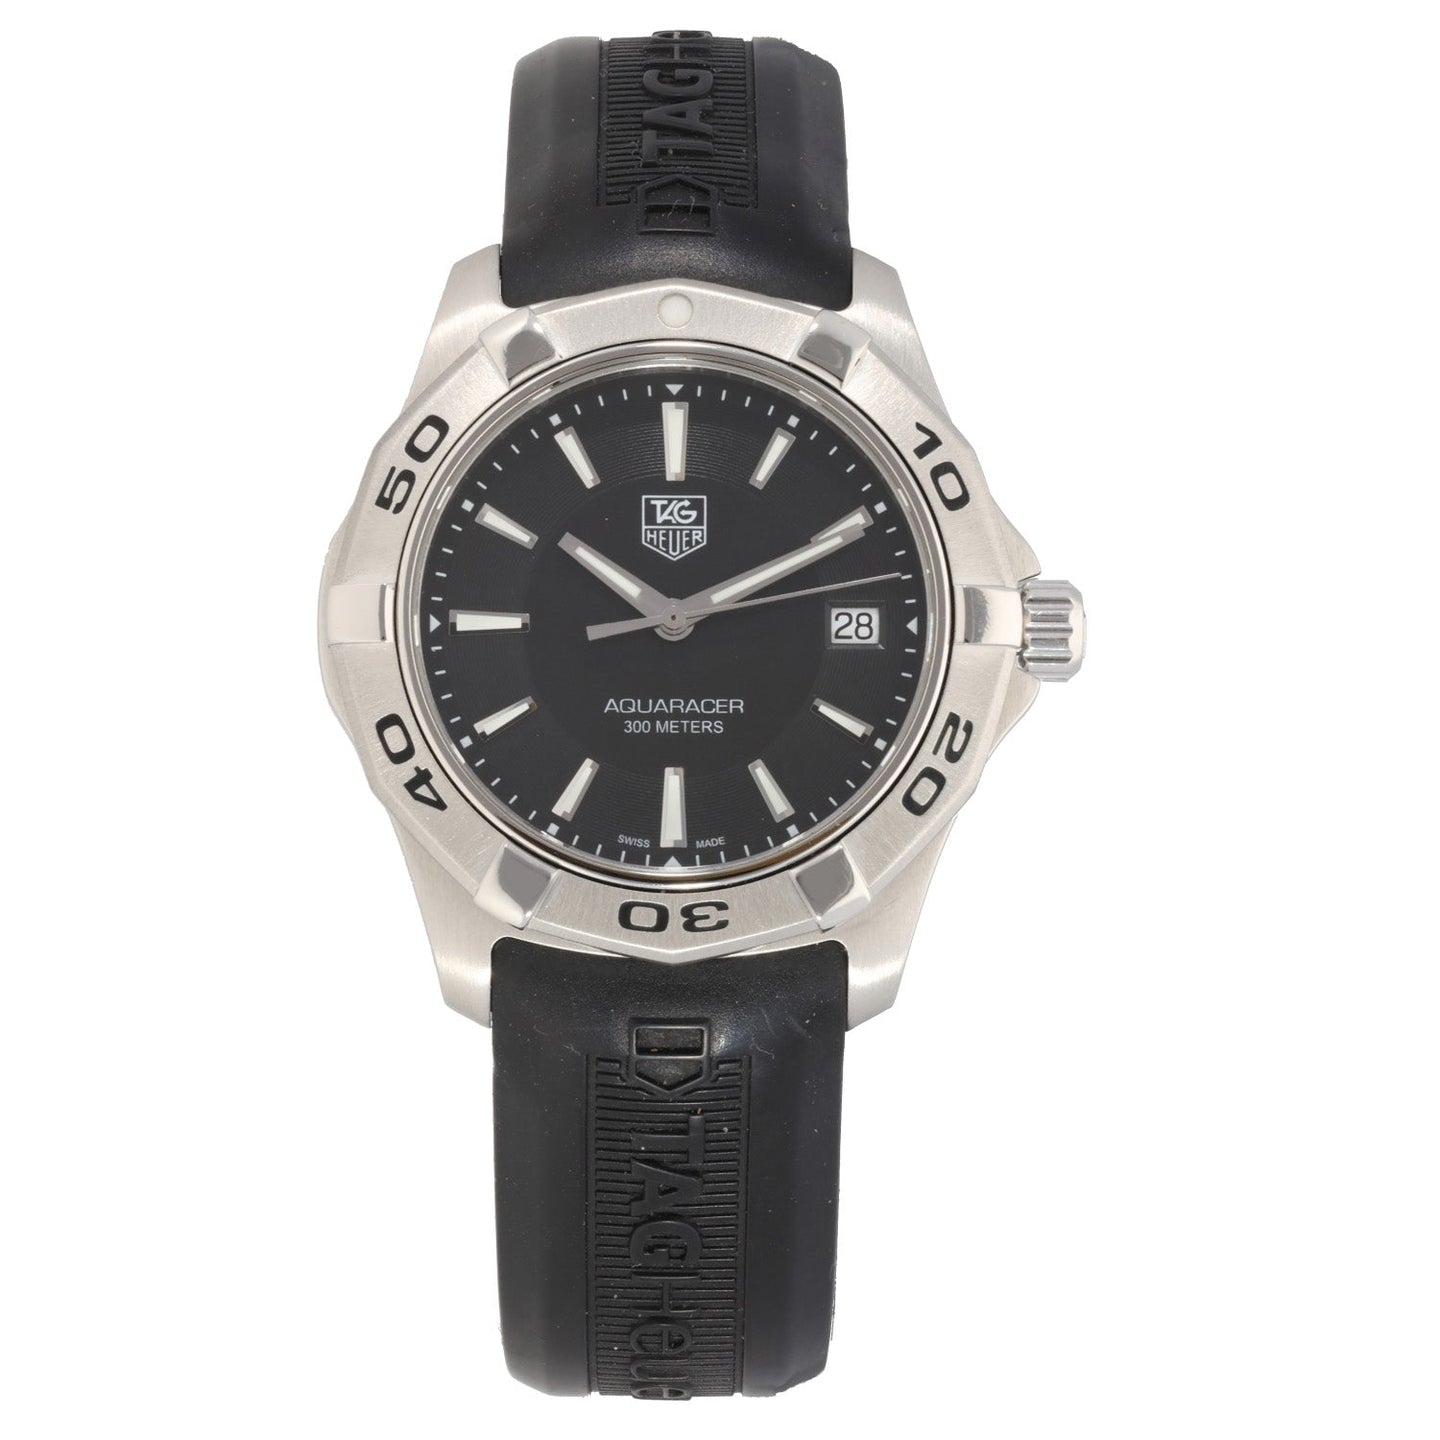 Tag Heuer Aquaracer WAP1110 39mm Stainless Steel Watch